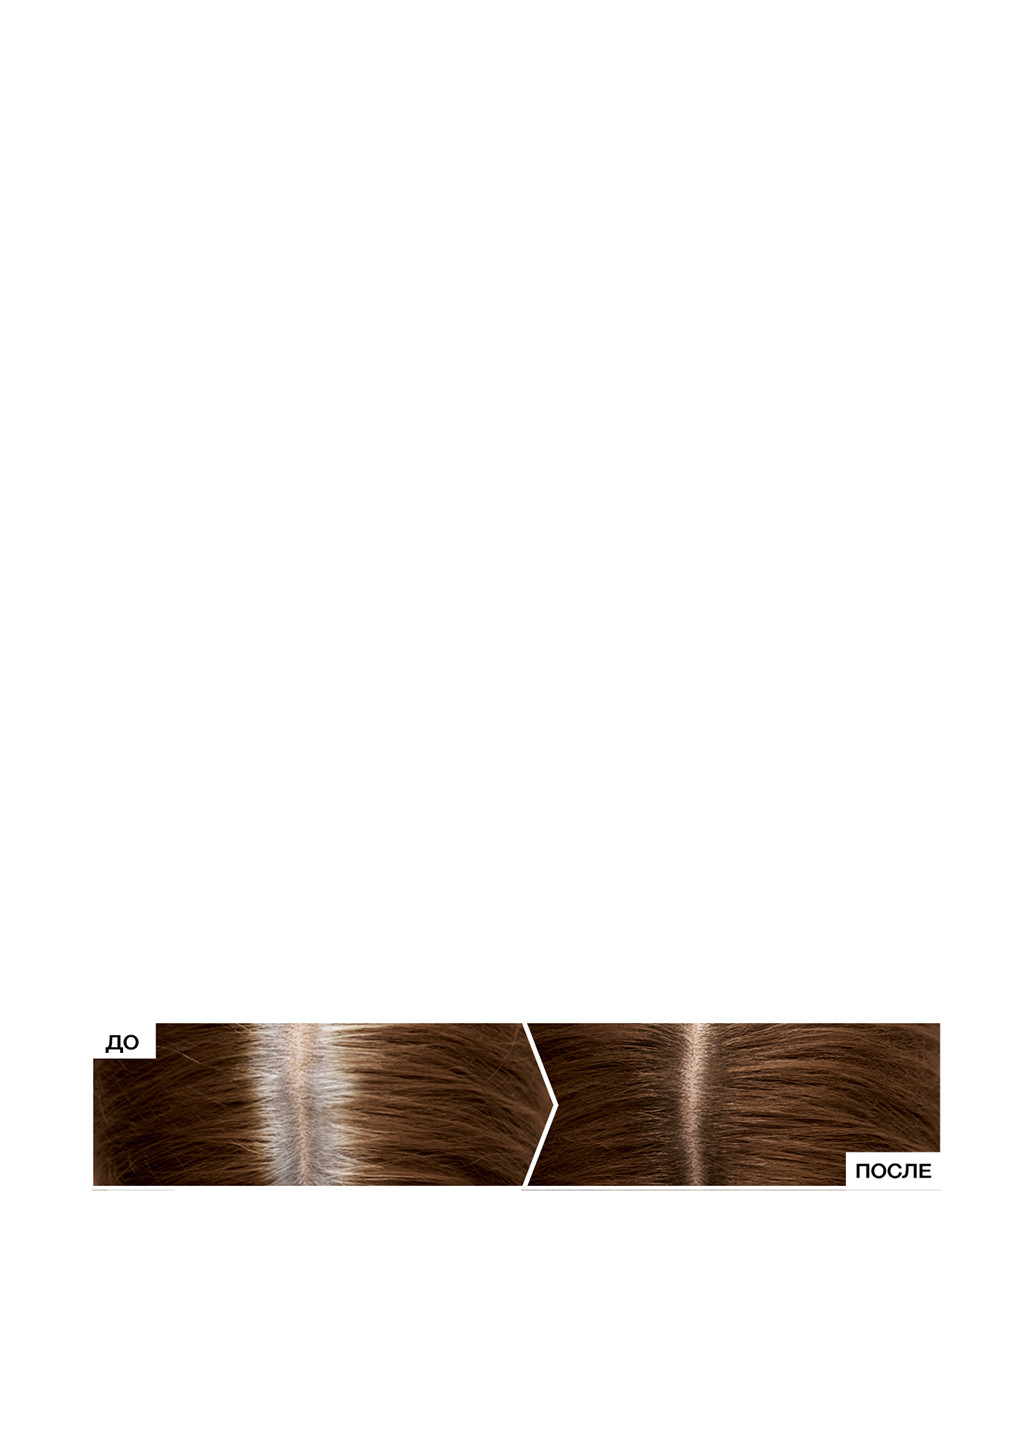 Спрей для волос Magic Retouch №3 (каштановый), 75 мл L'Oreal Paris (96593622)